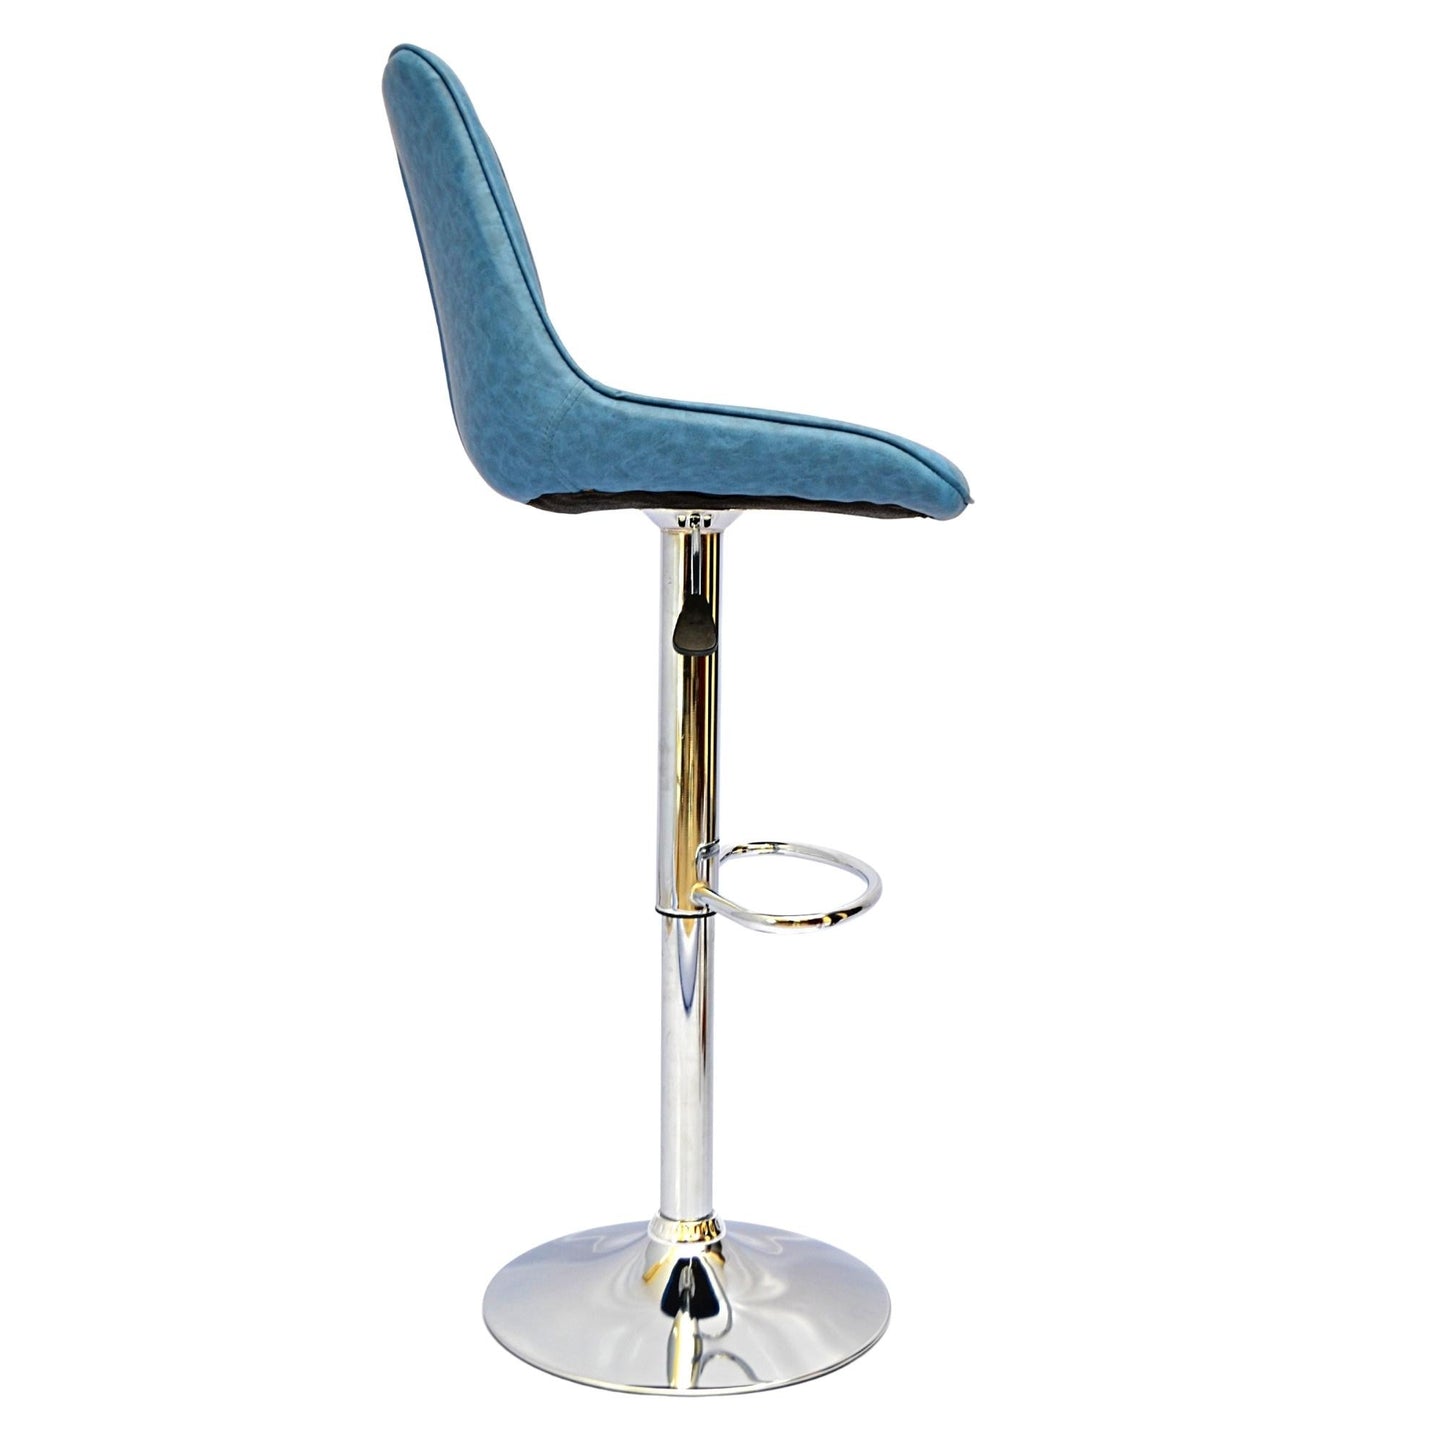 Bar stool (FT-913B) Blue